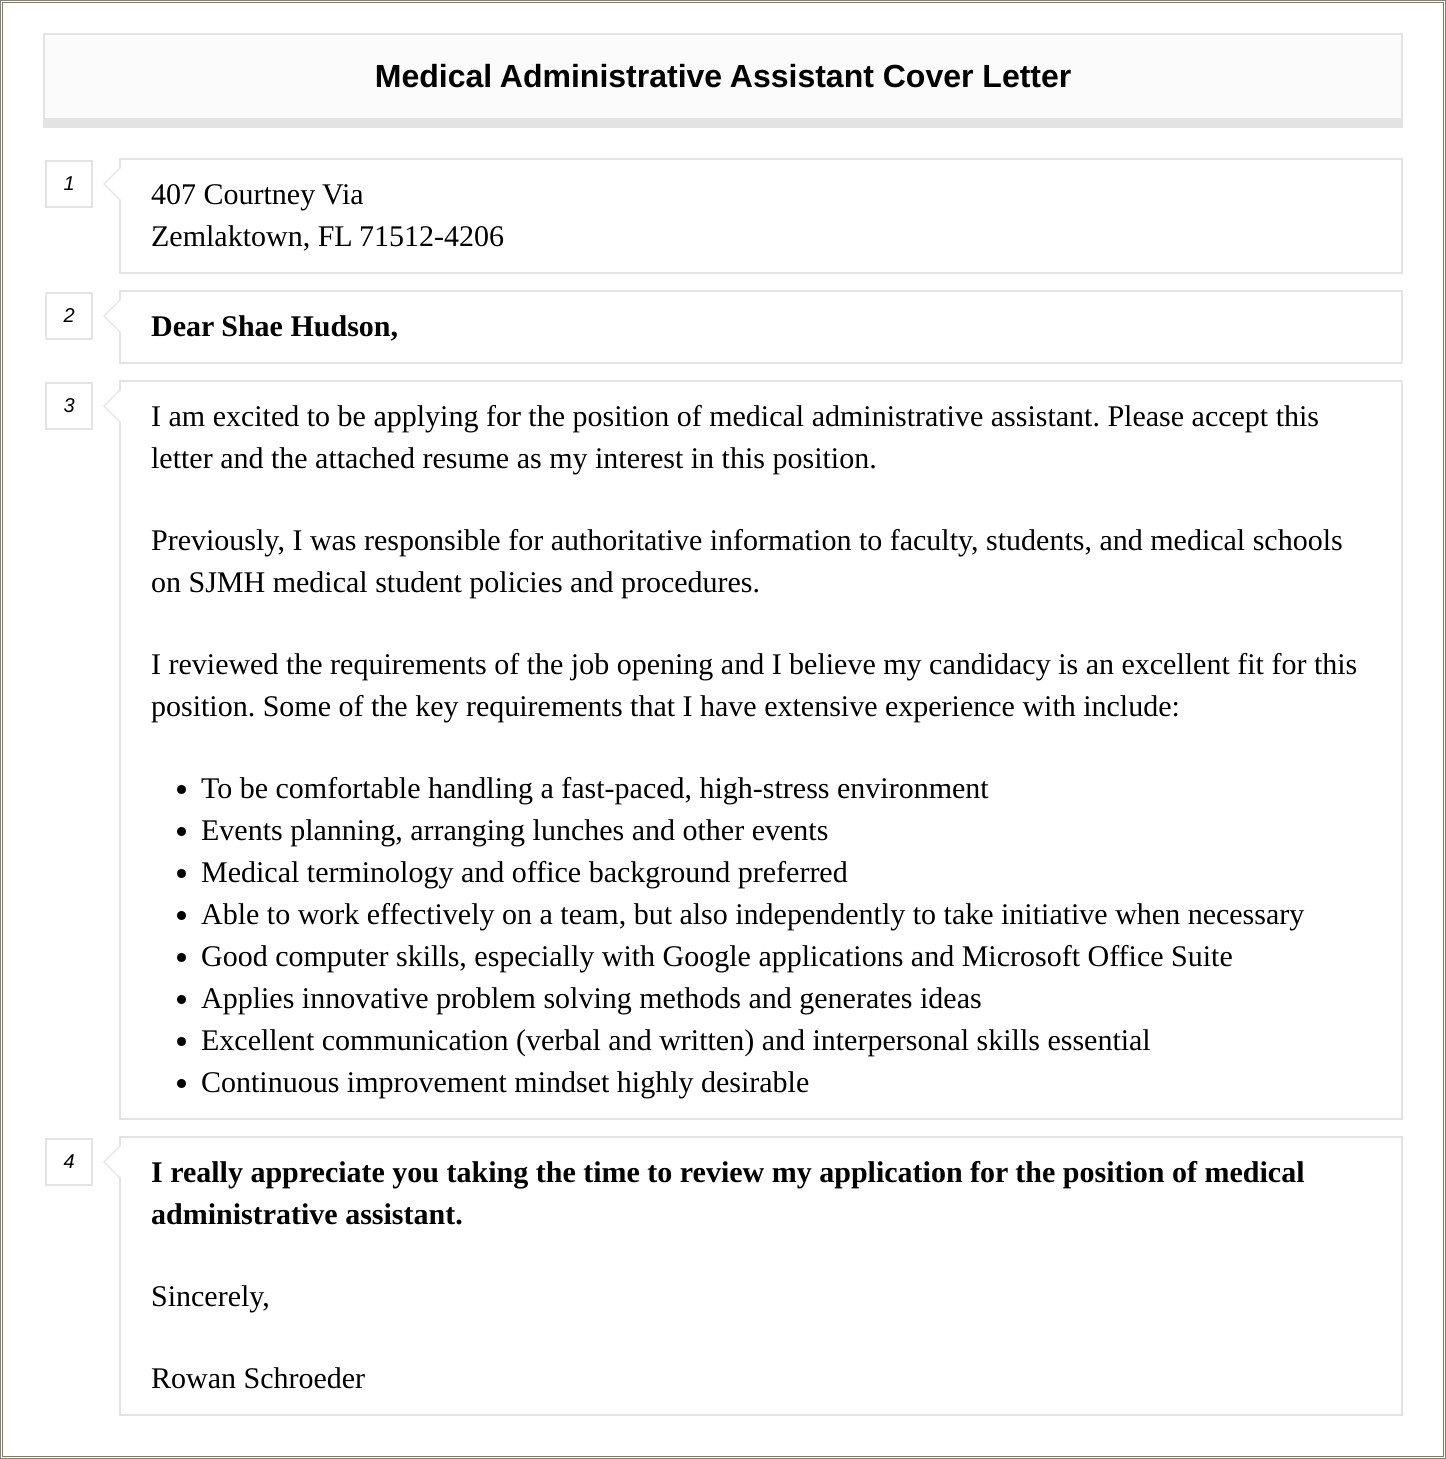 Medical Administrative Assistant Resume Cover Letter